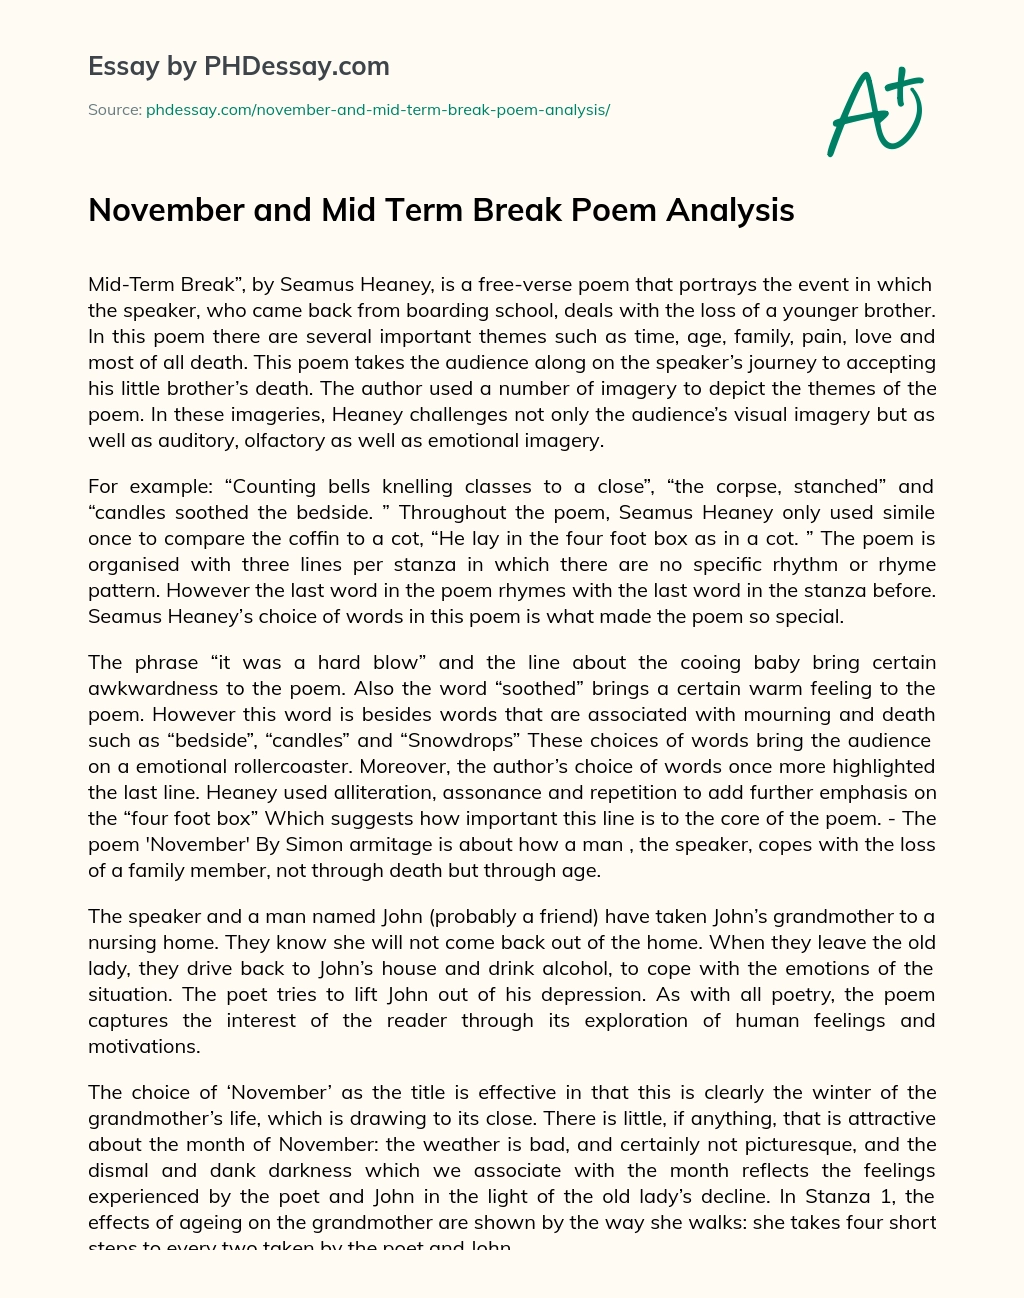 November and Mid Term Break Poem Analysis essay